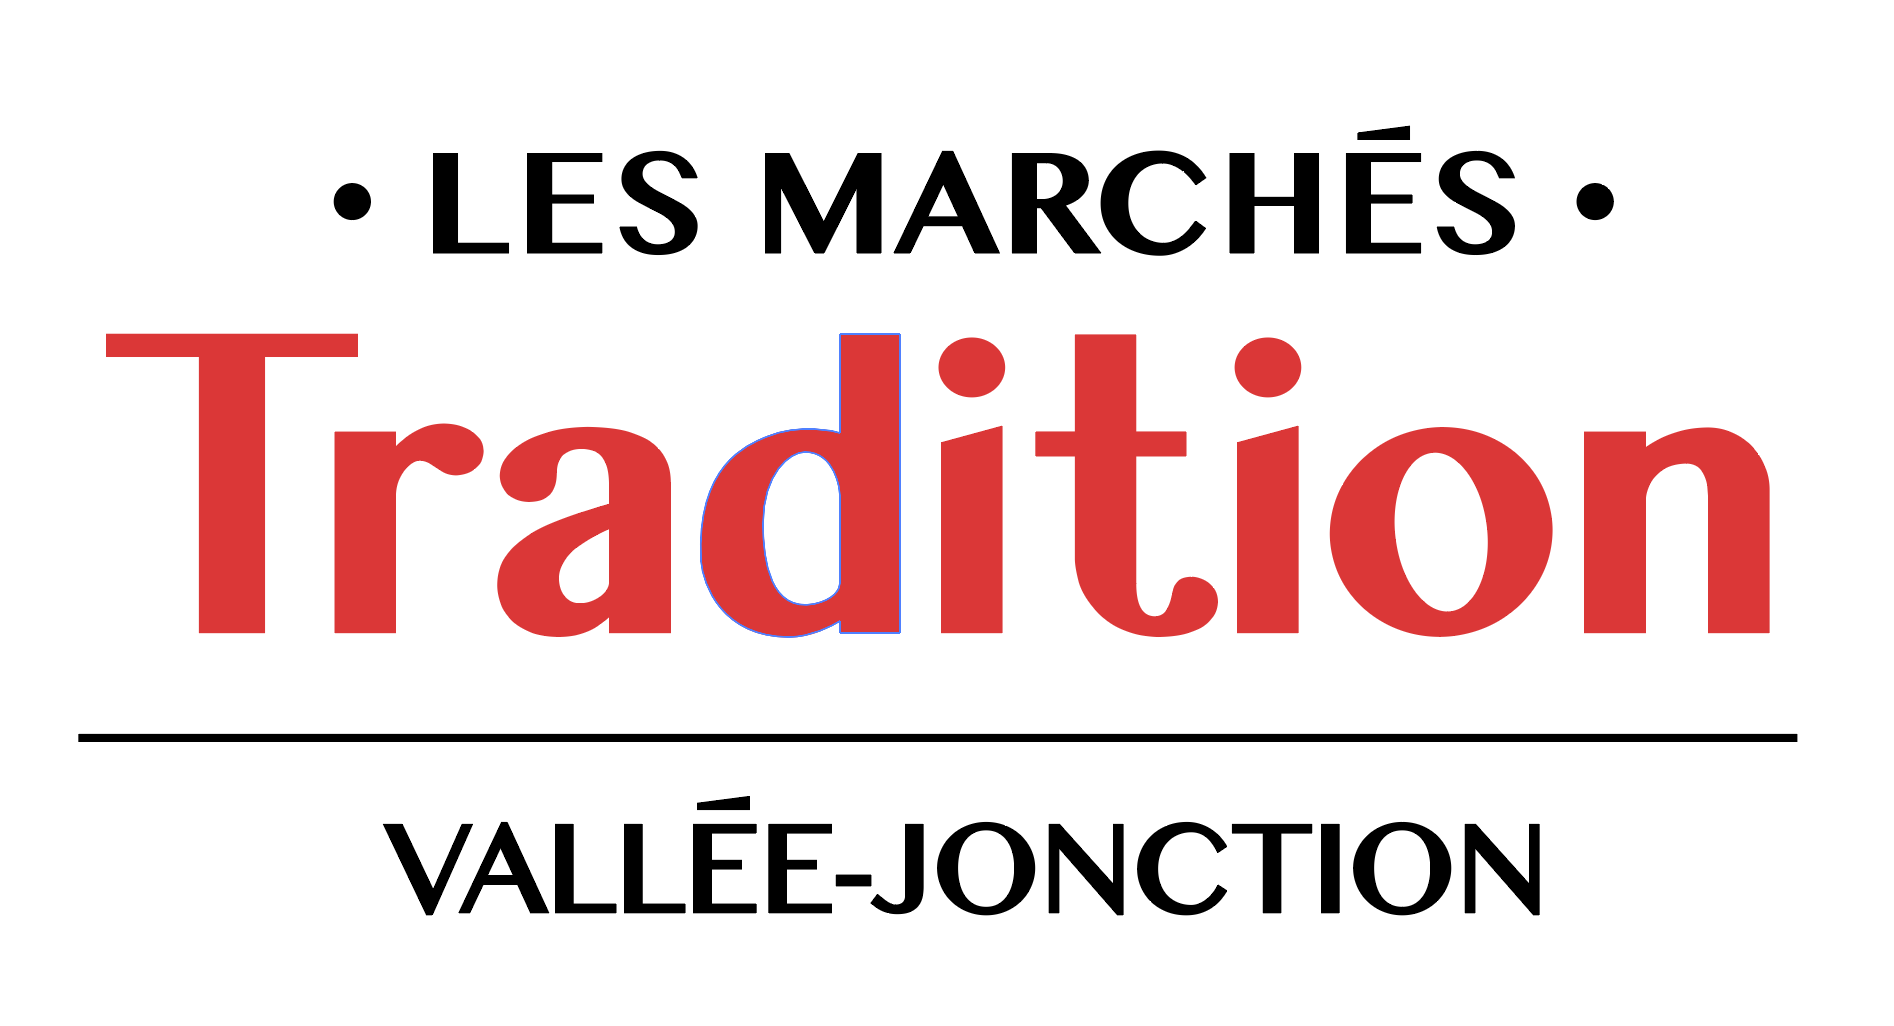 MarcheTradition logo